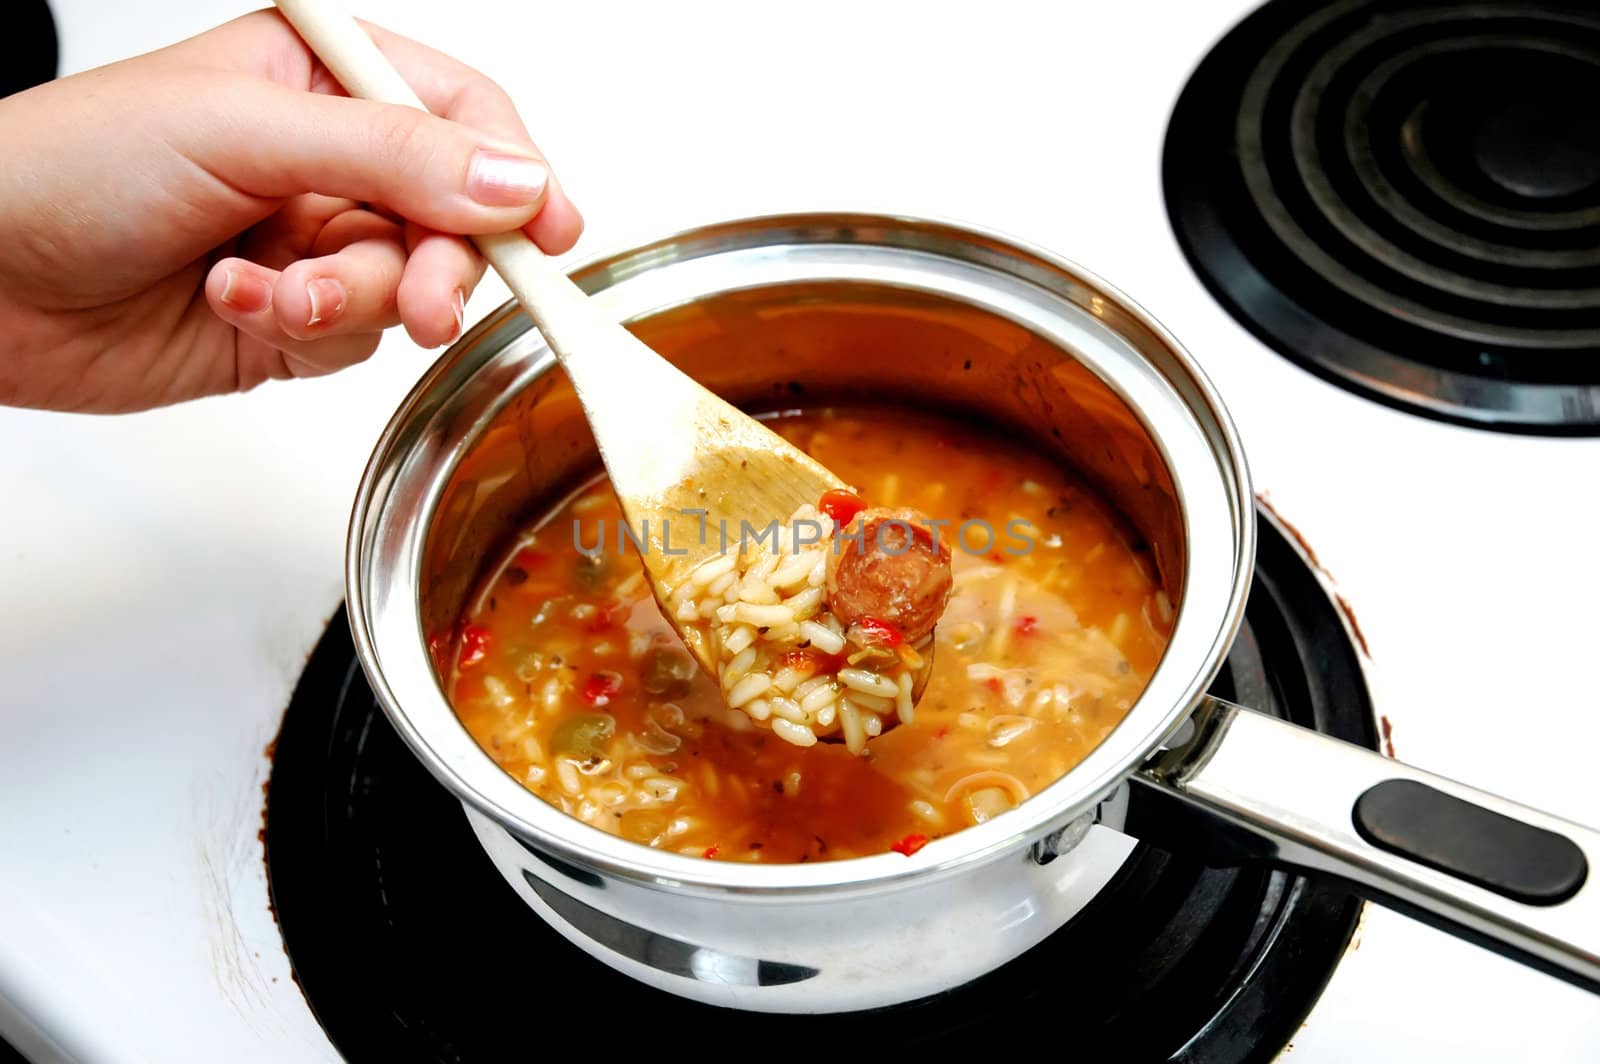 Soup on Stove by dehooks